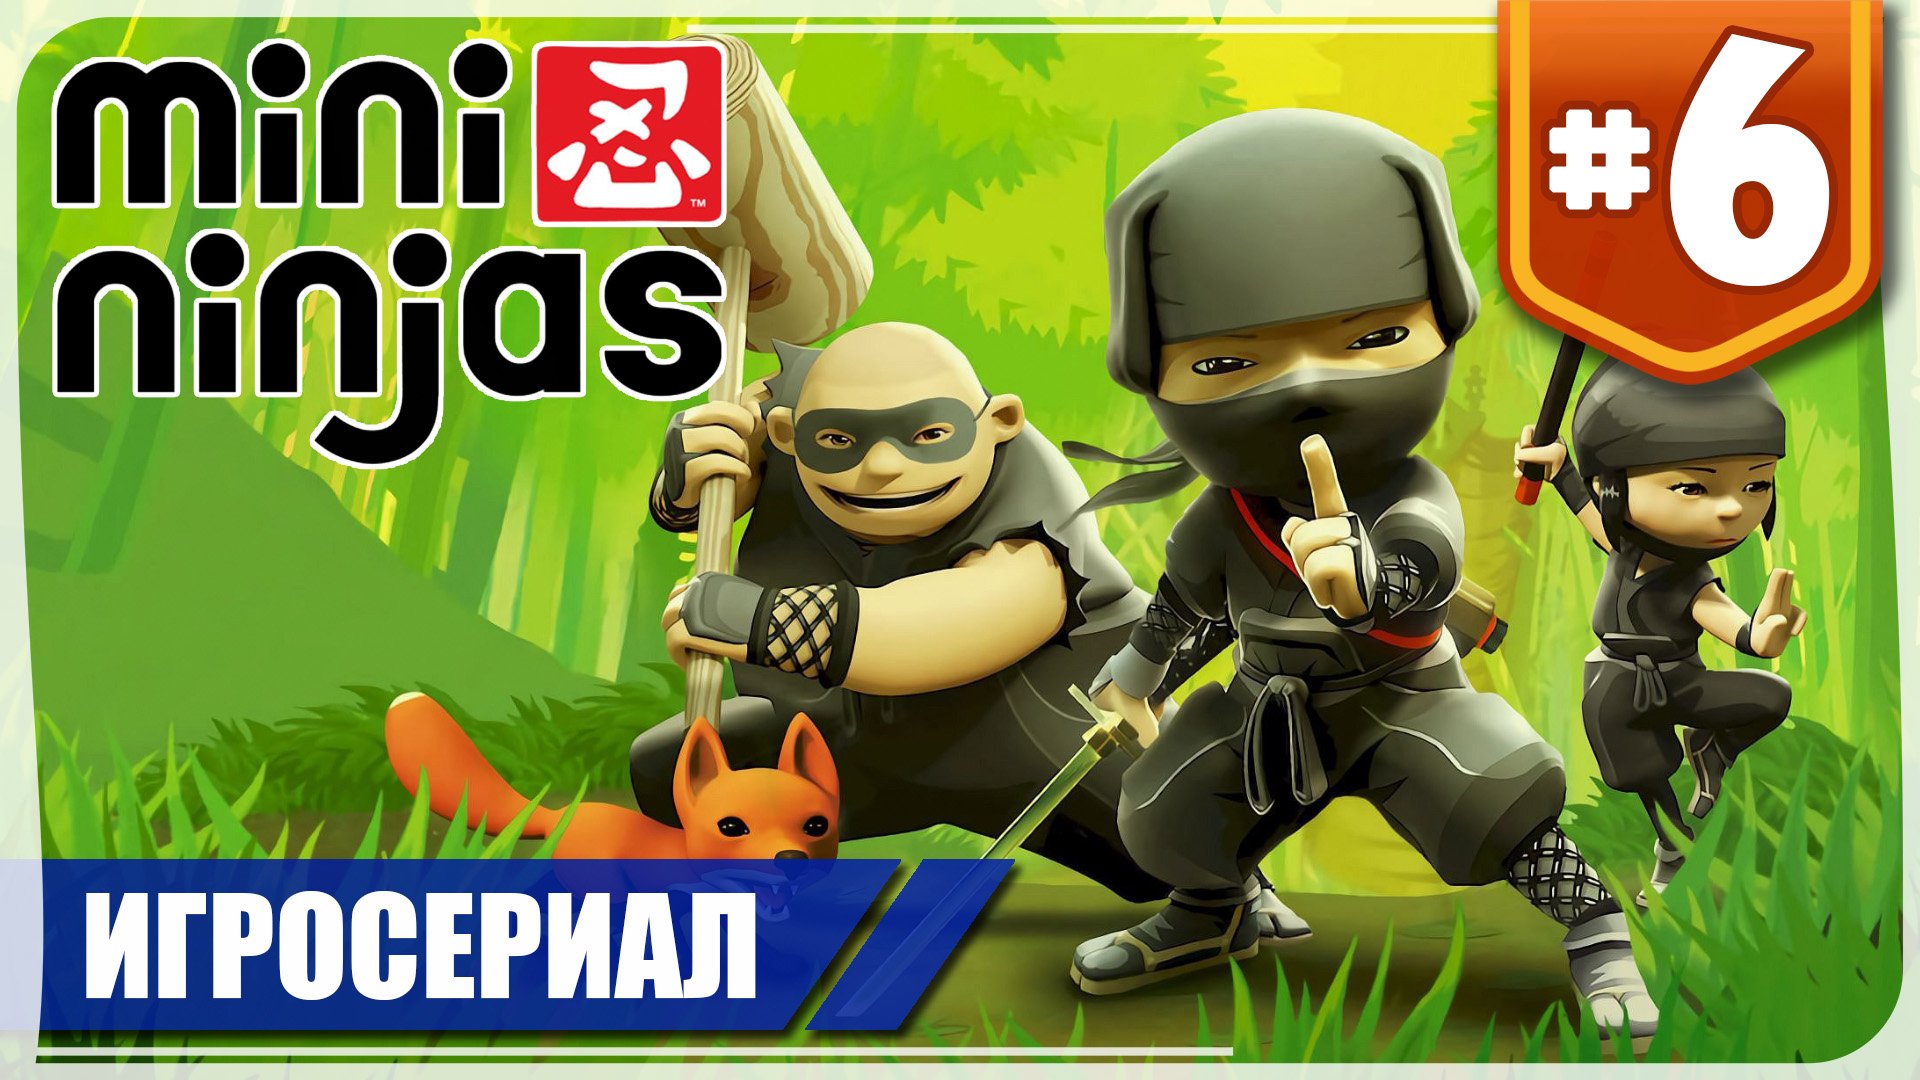 Mini Ninjas #6 ❖ Игросериал